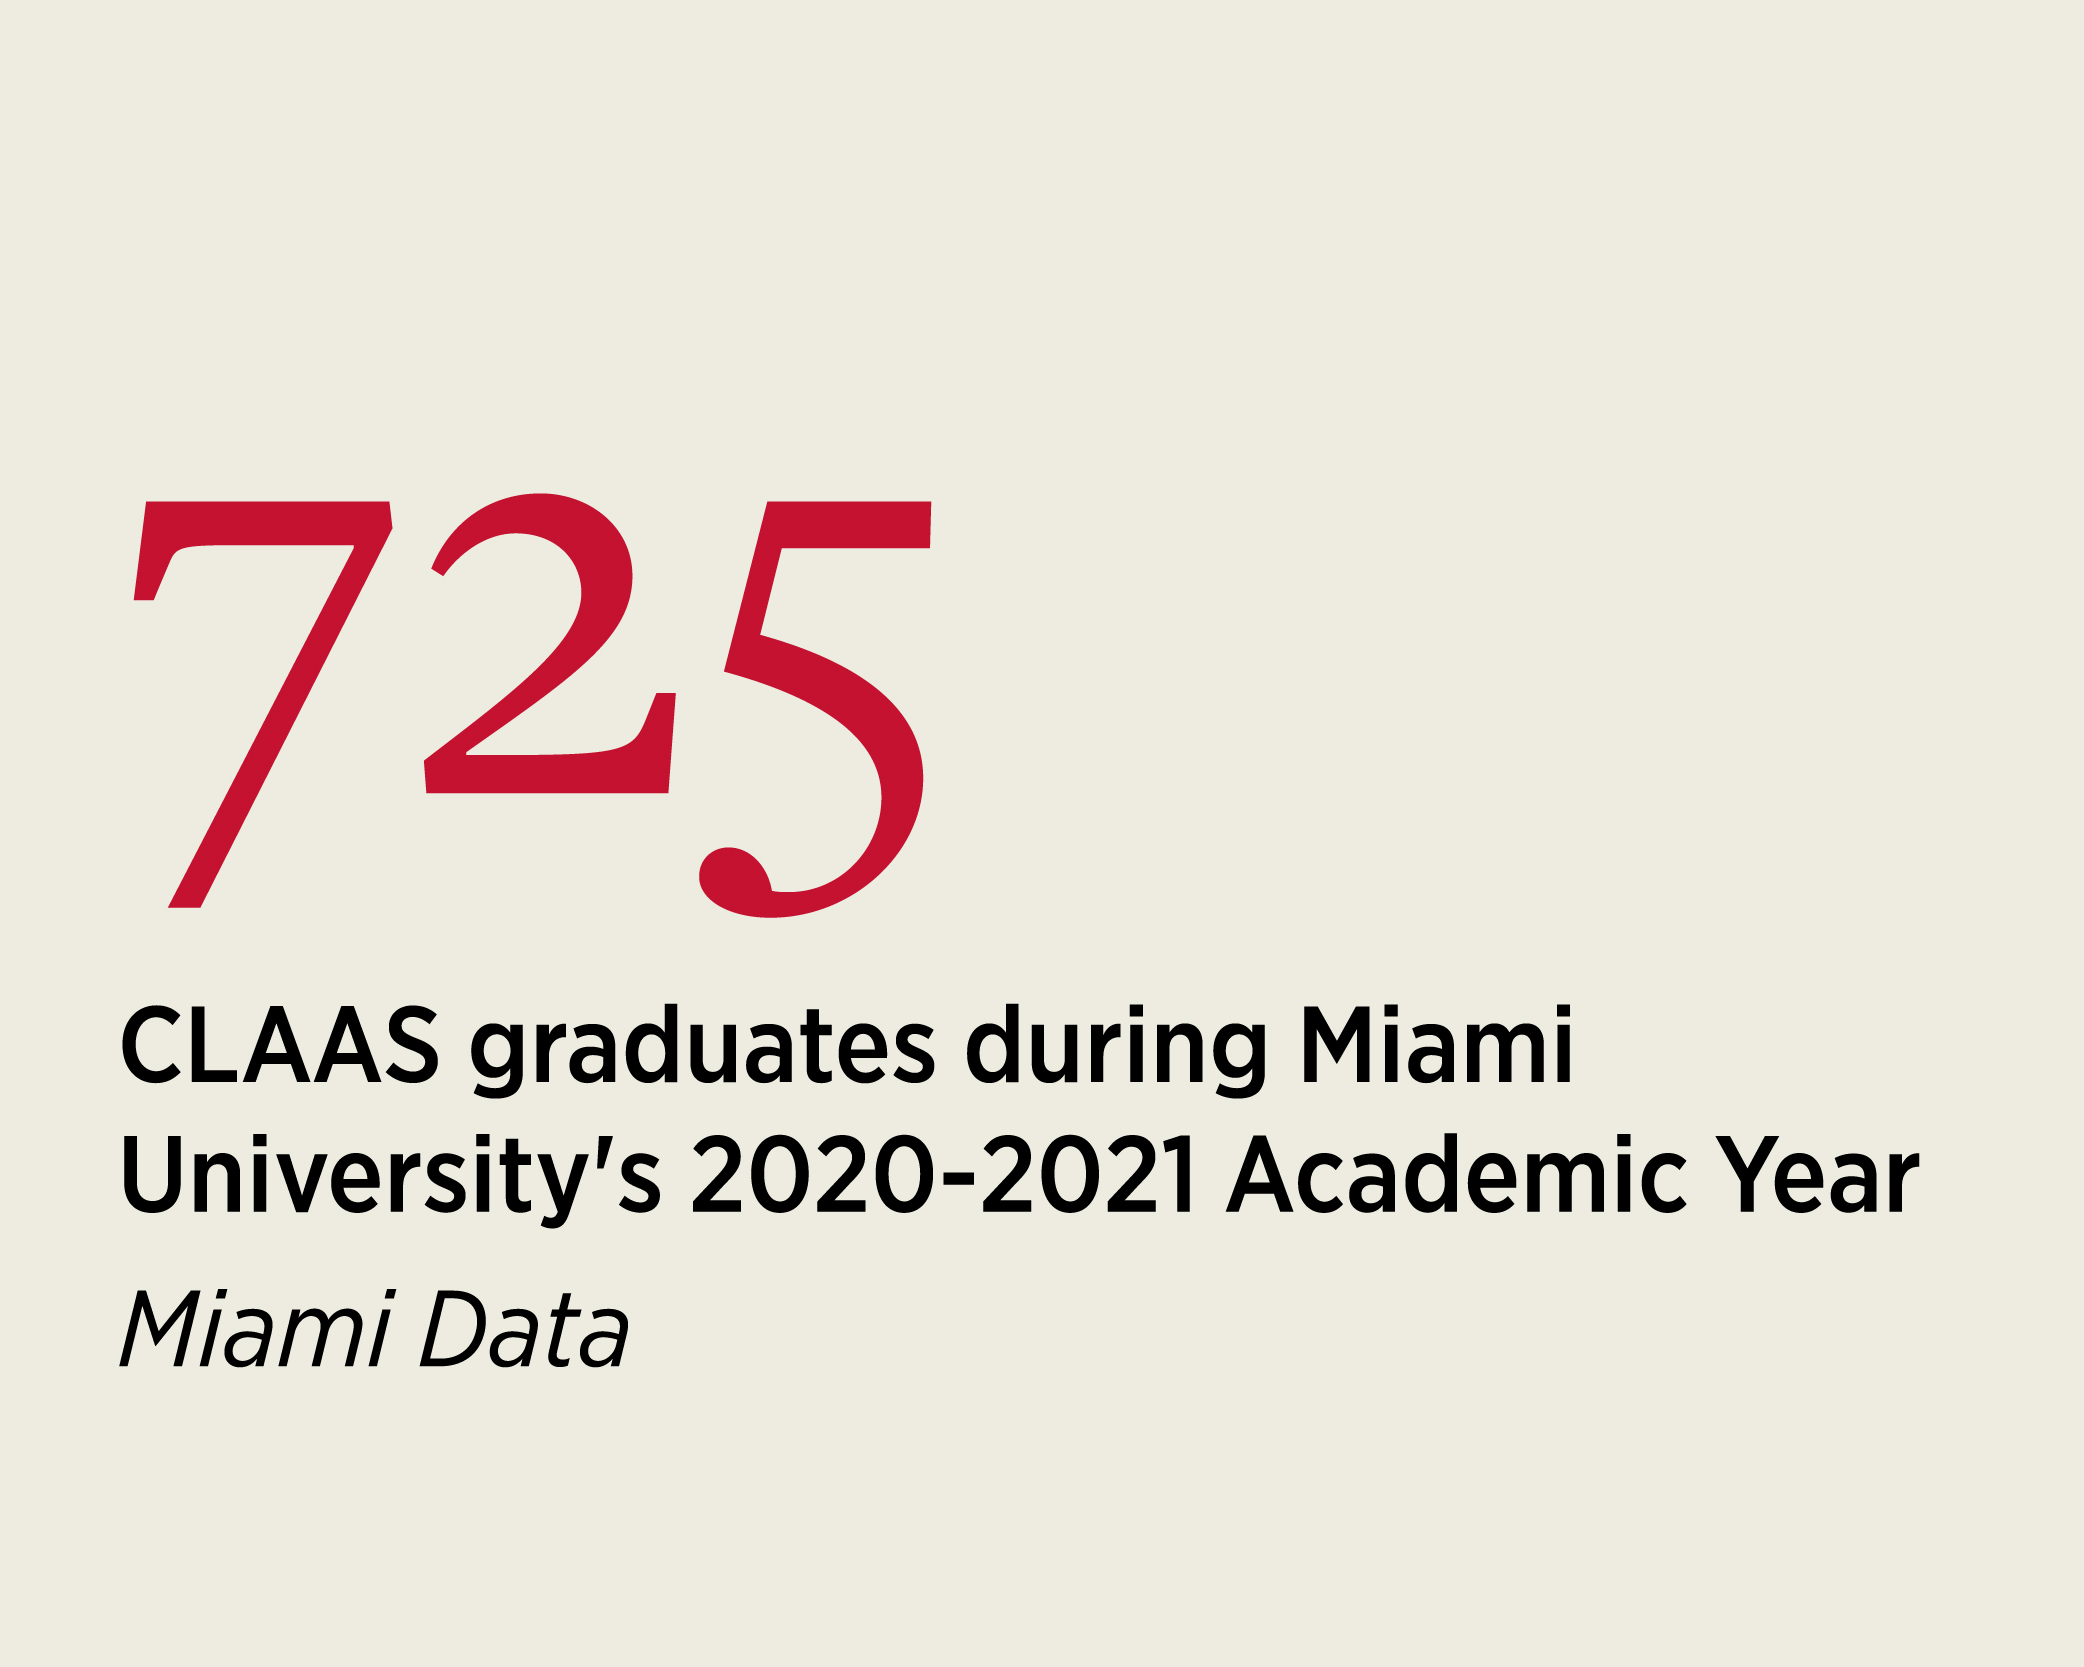  725 CLAAS graduates during Miami University's 2020-2021 Academic Year Miami Data